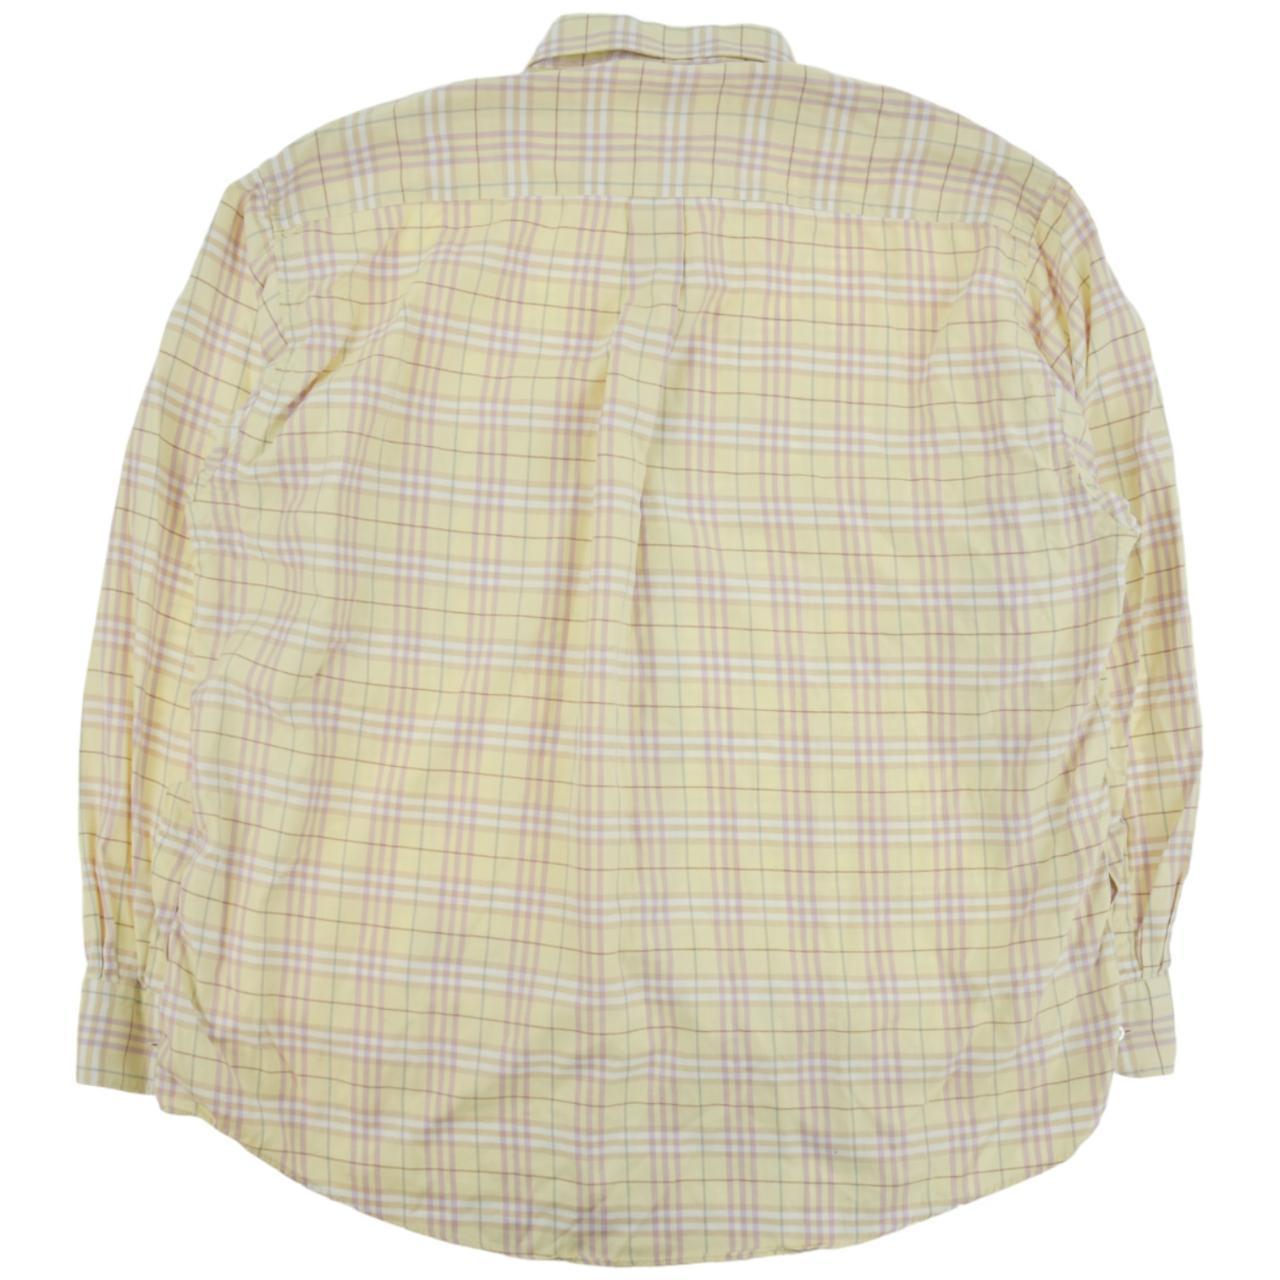 Vintage Burberry Nova Check Shirt Size XL - Known Source